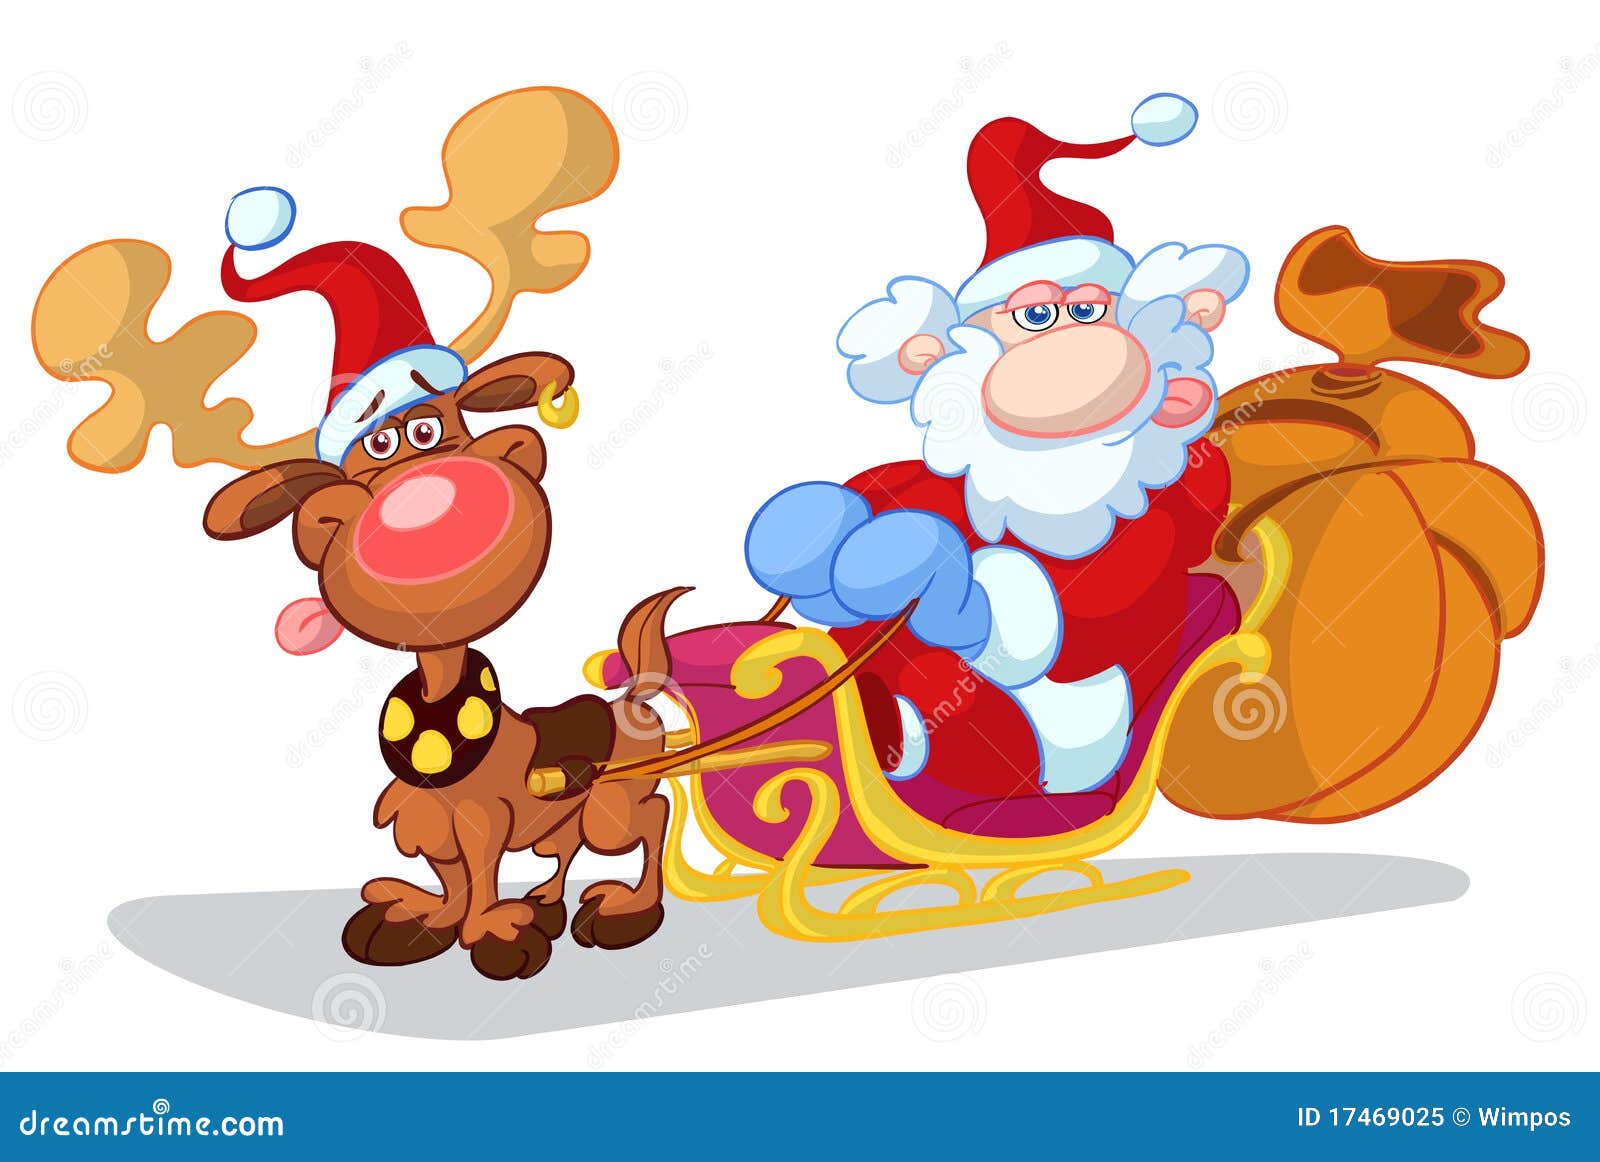 Christmas cartoon stock illustration. Illustration of funny - 17469025